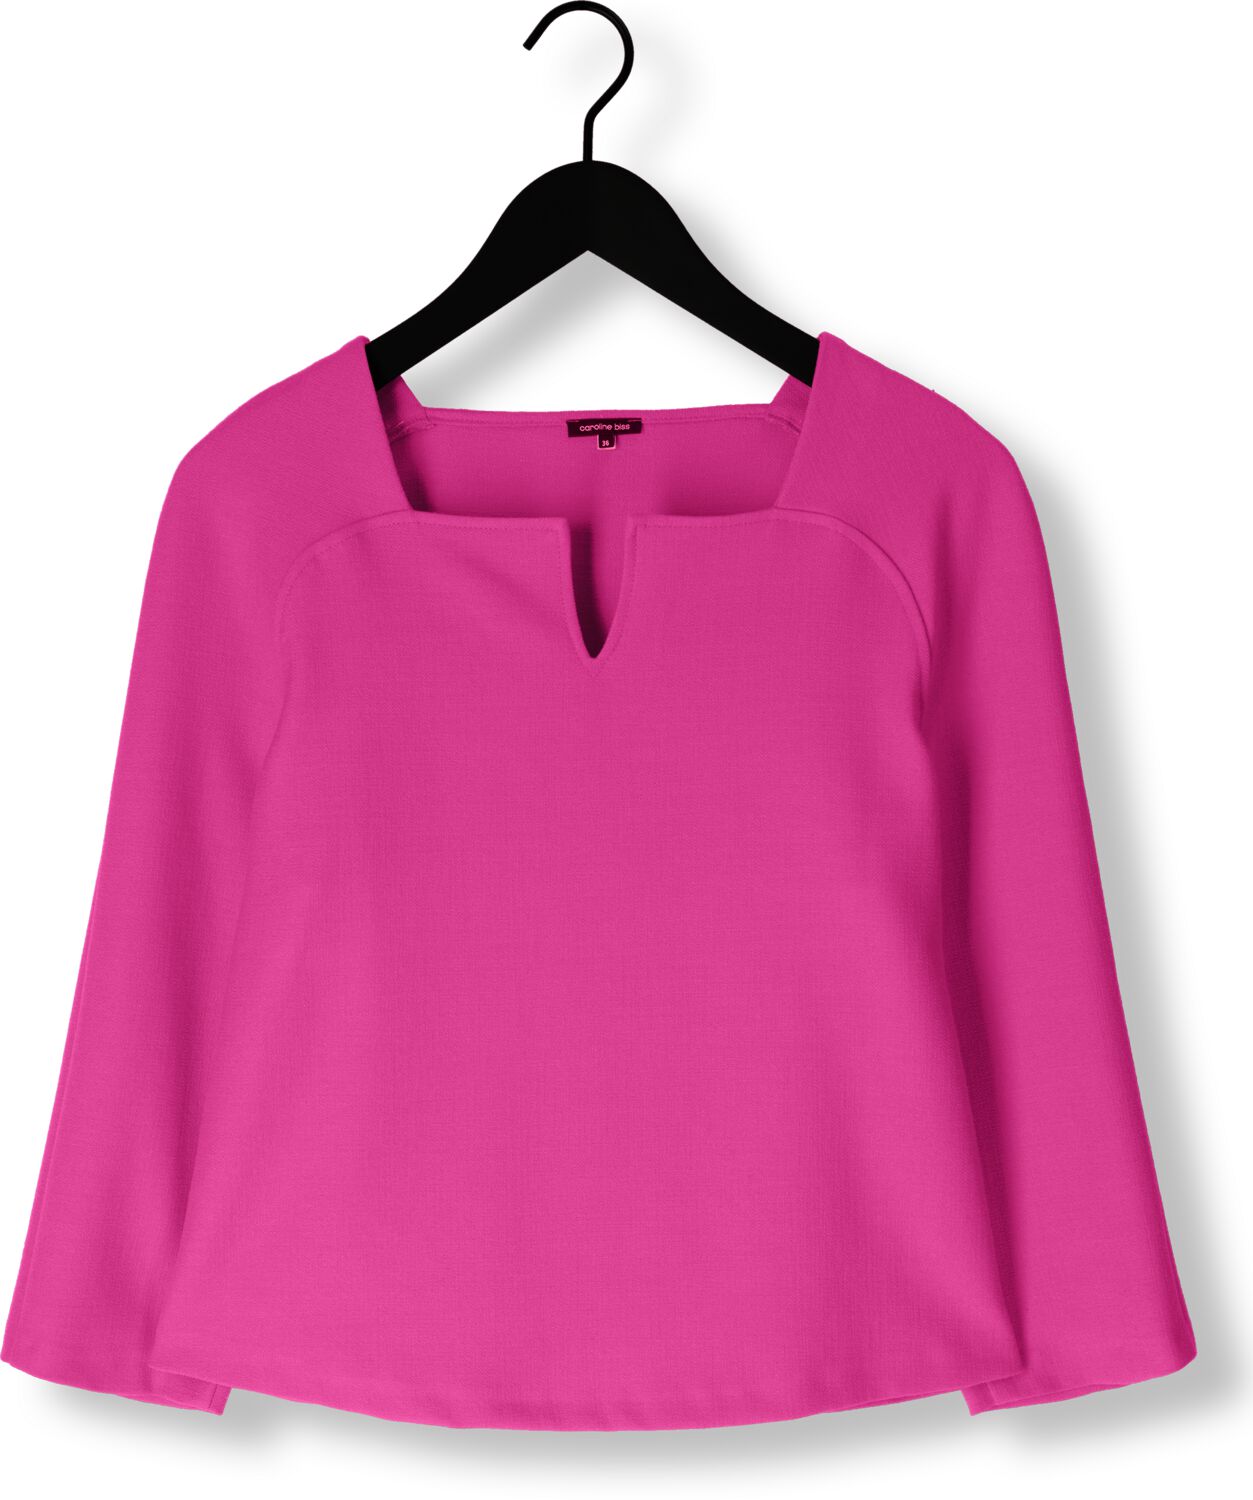 CAROLINE BISS Dames Tops & T-shirts 1681 73 Fuchsia